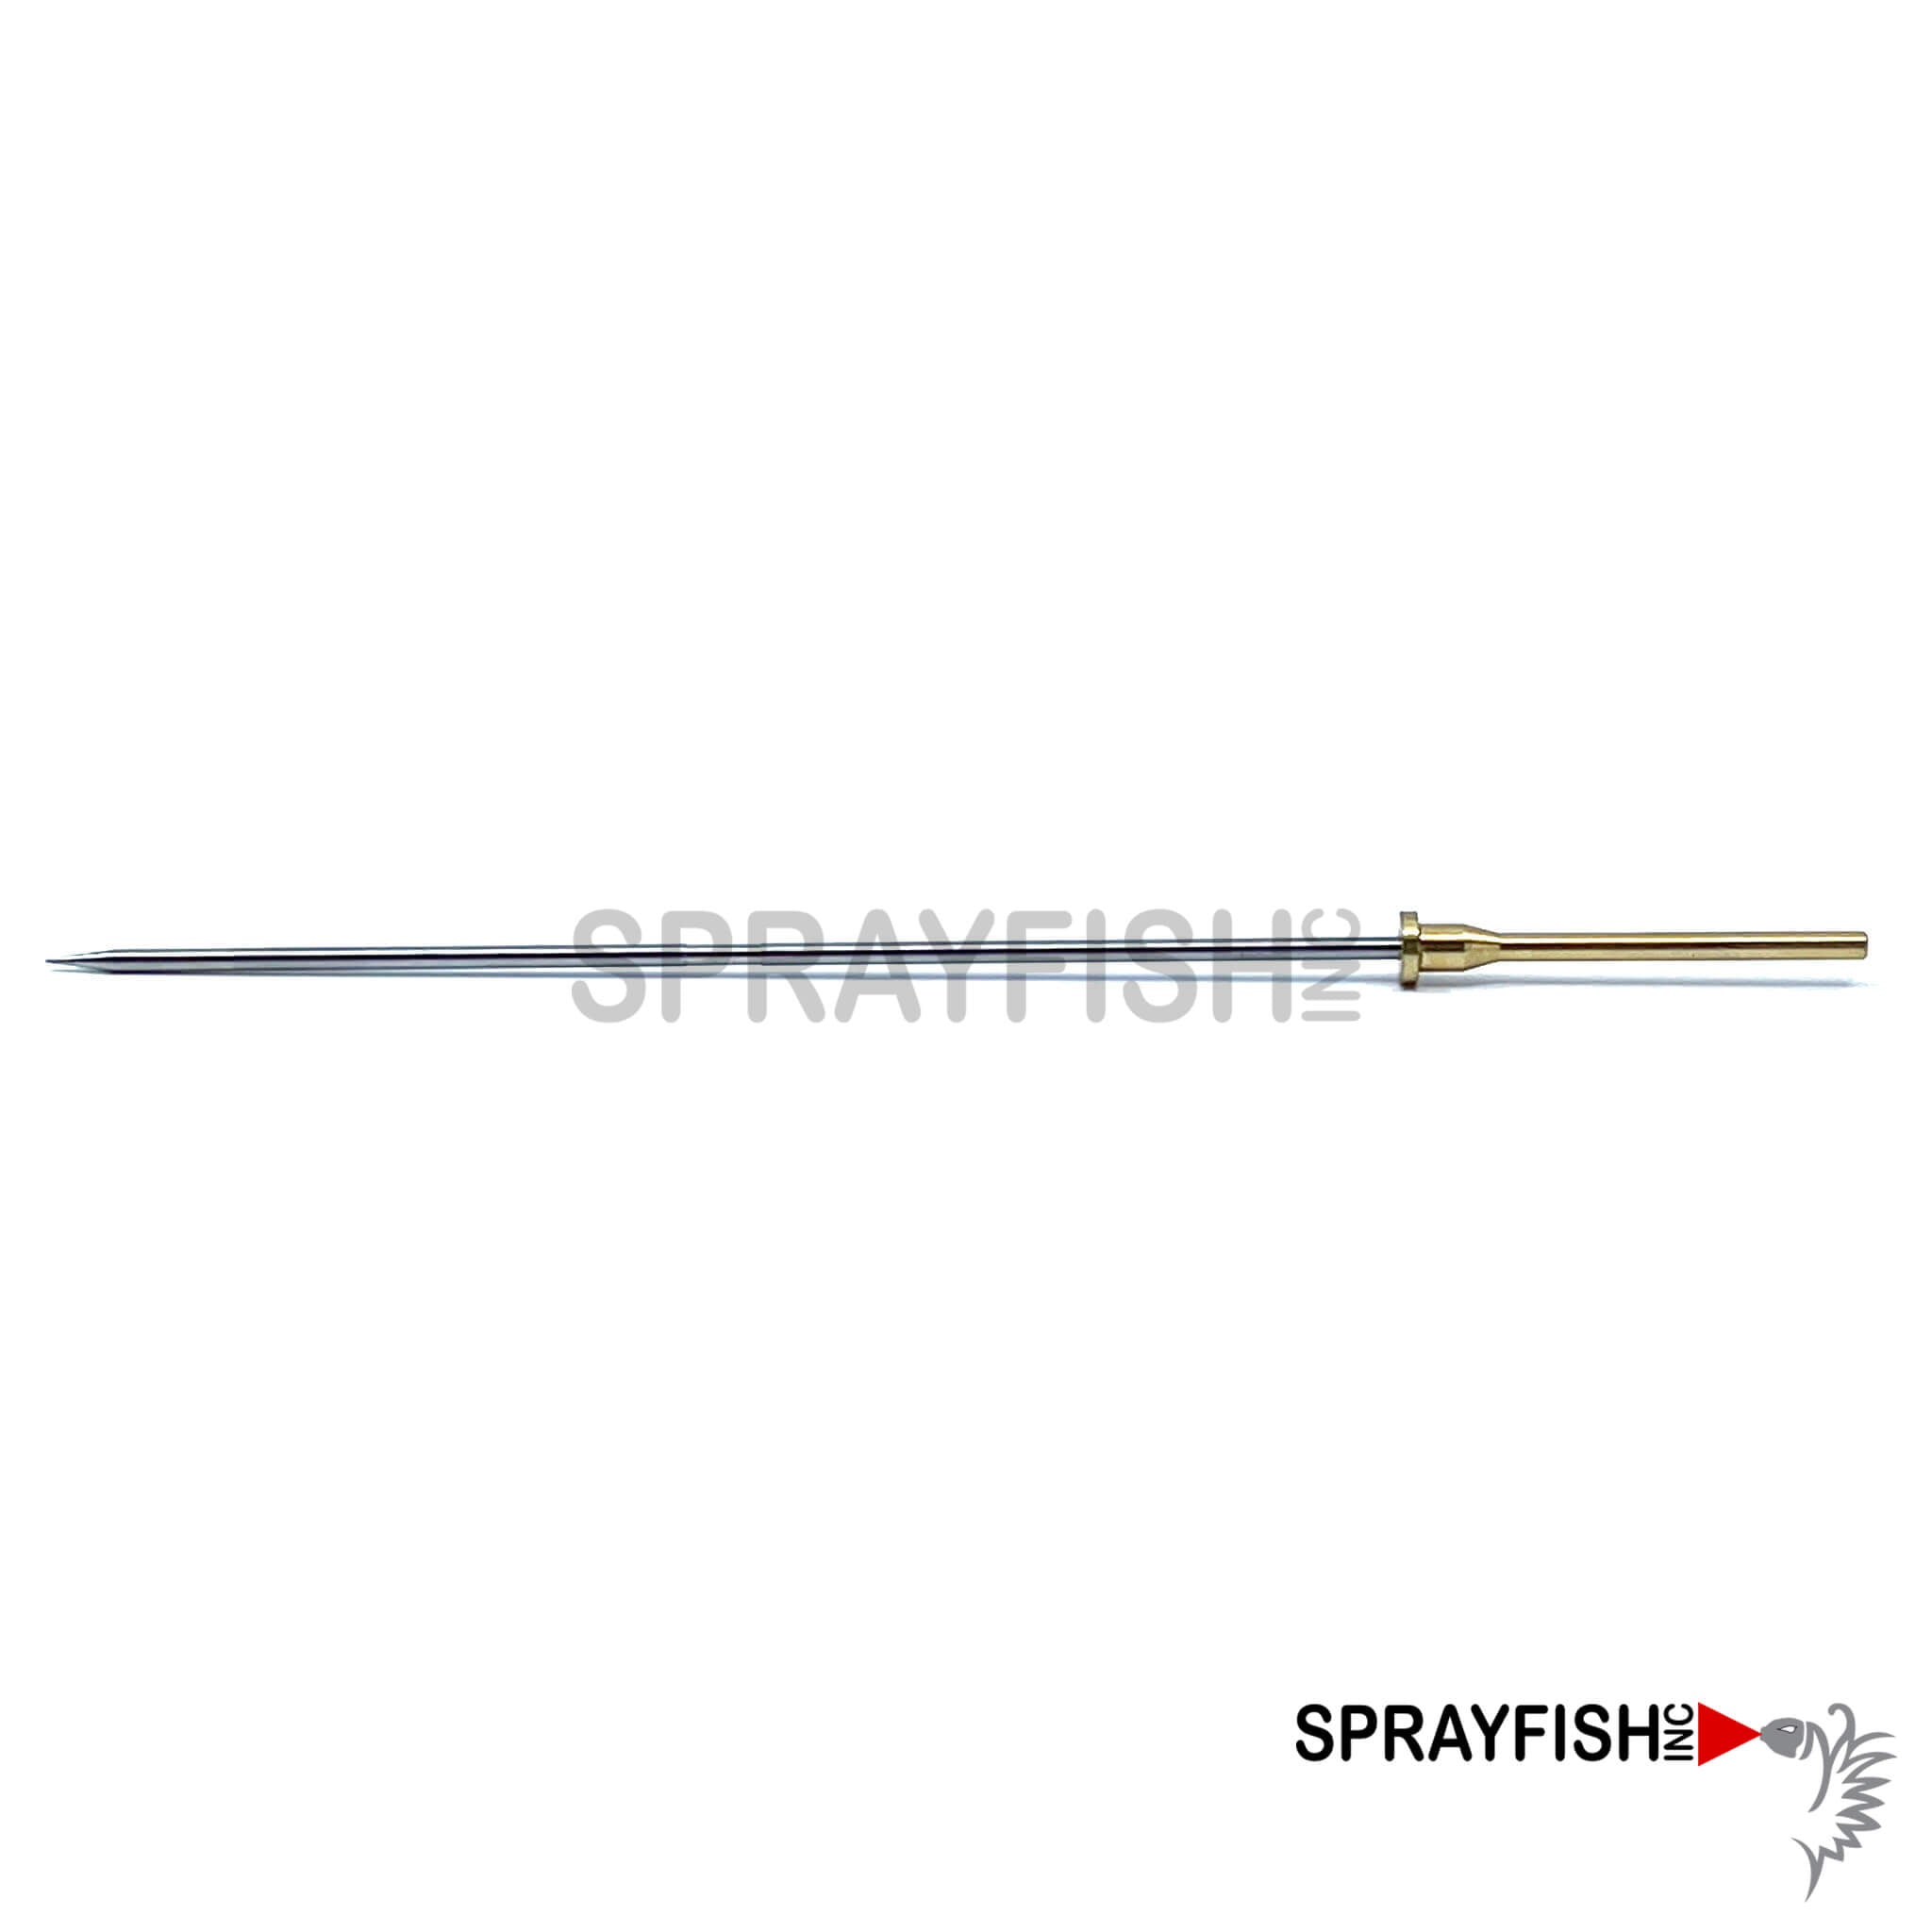 Anest Iwata LPH-80 Fluid Needle Set